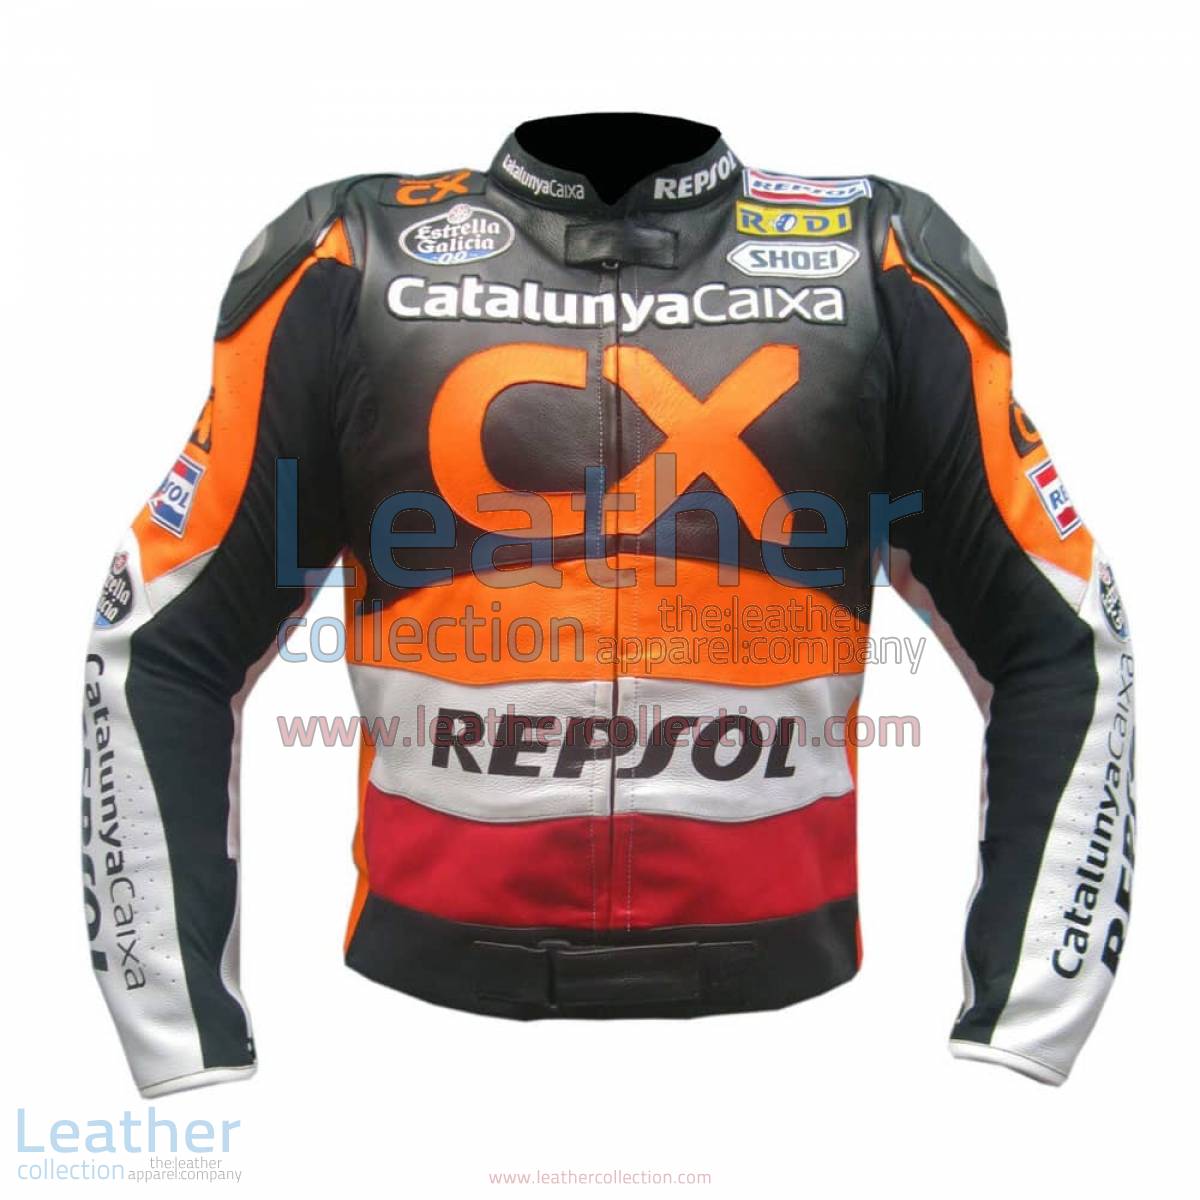 Repsol CX Leather Race Jacket | Repsol leather jacket